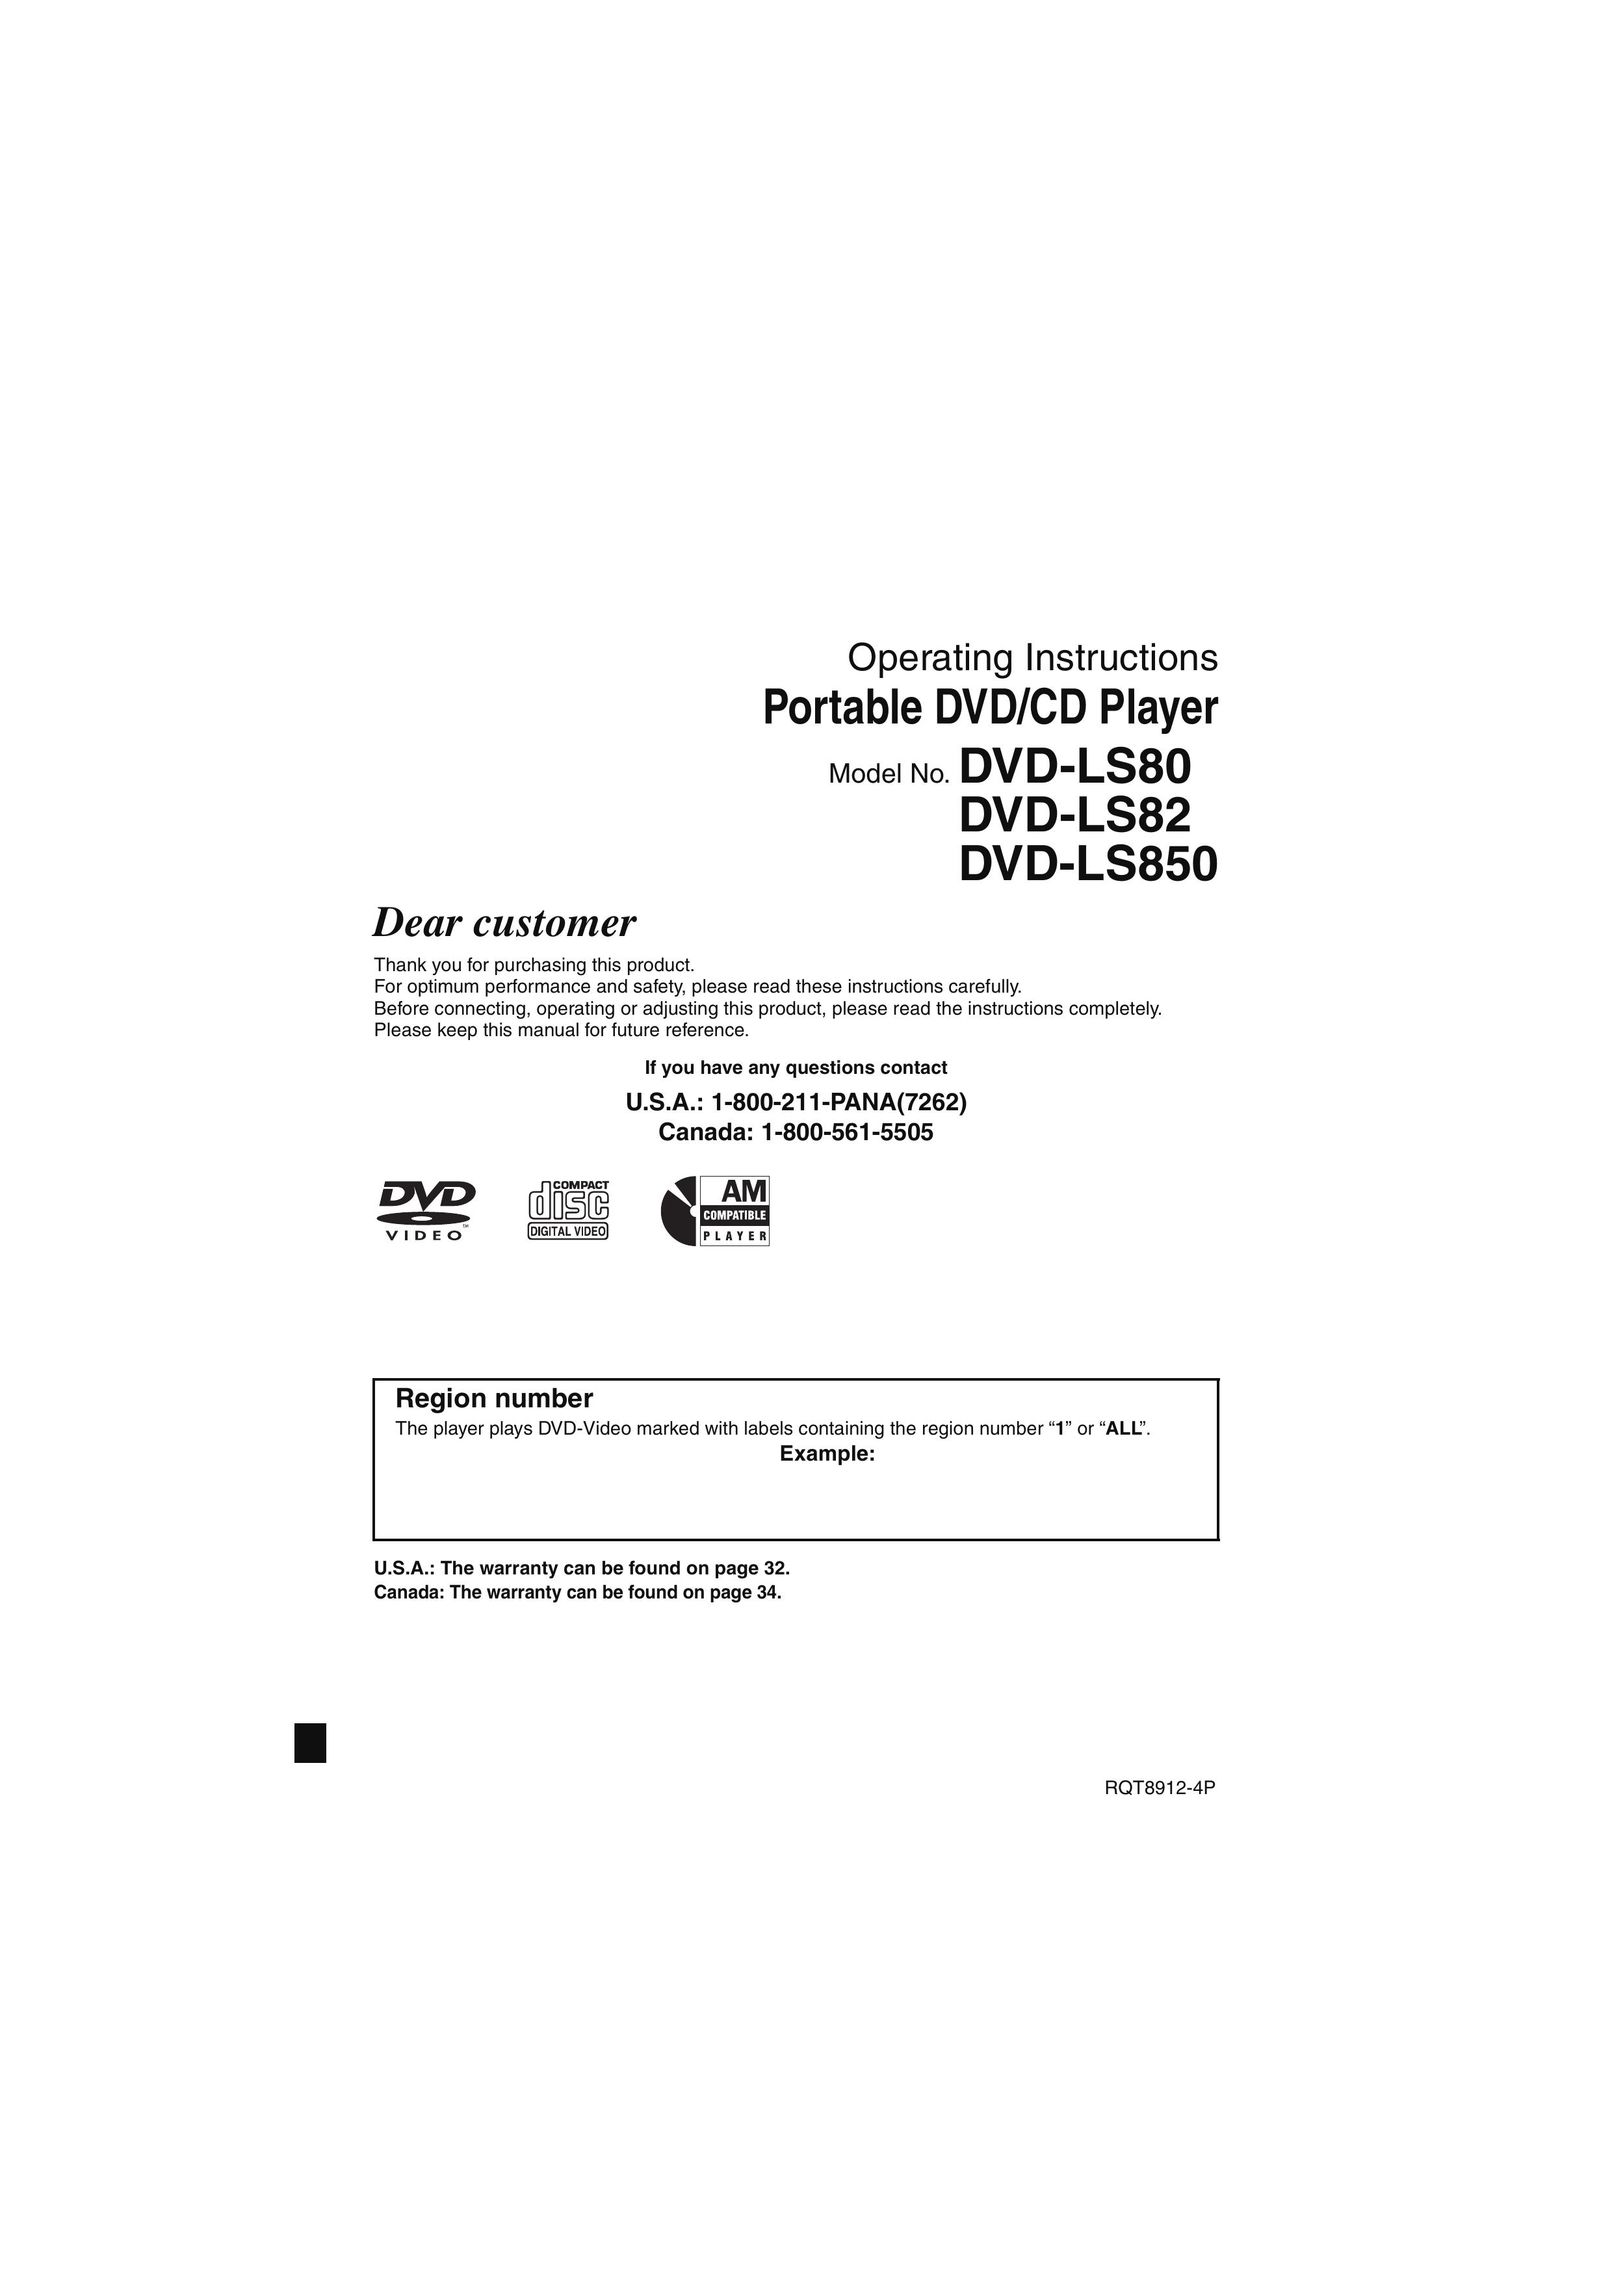 Panasonic DVD-LS82 Portable CD Player User Manual